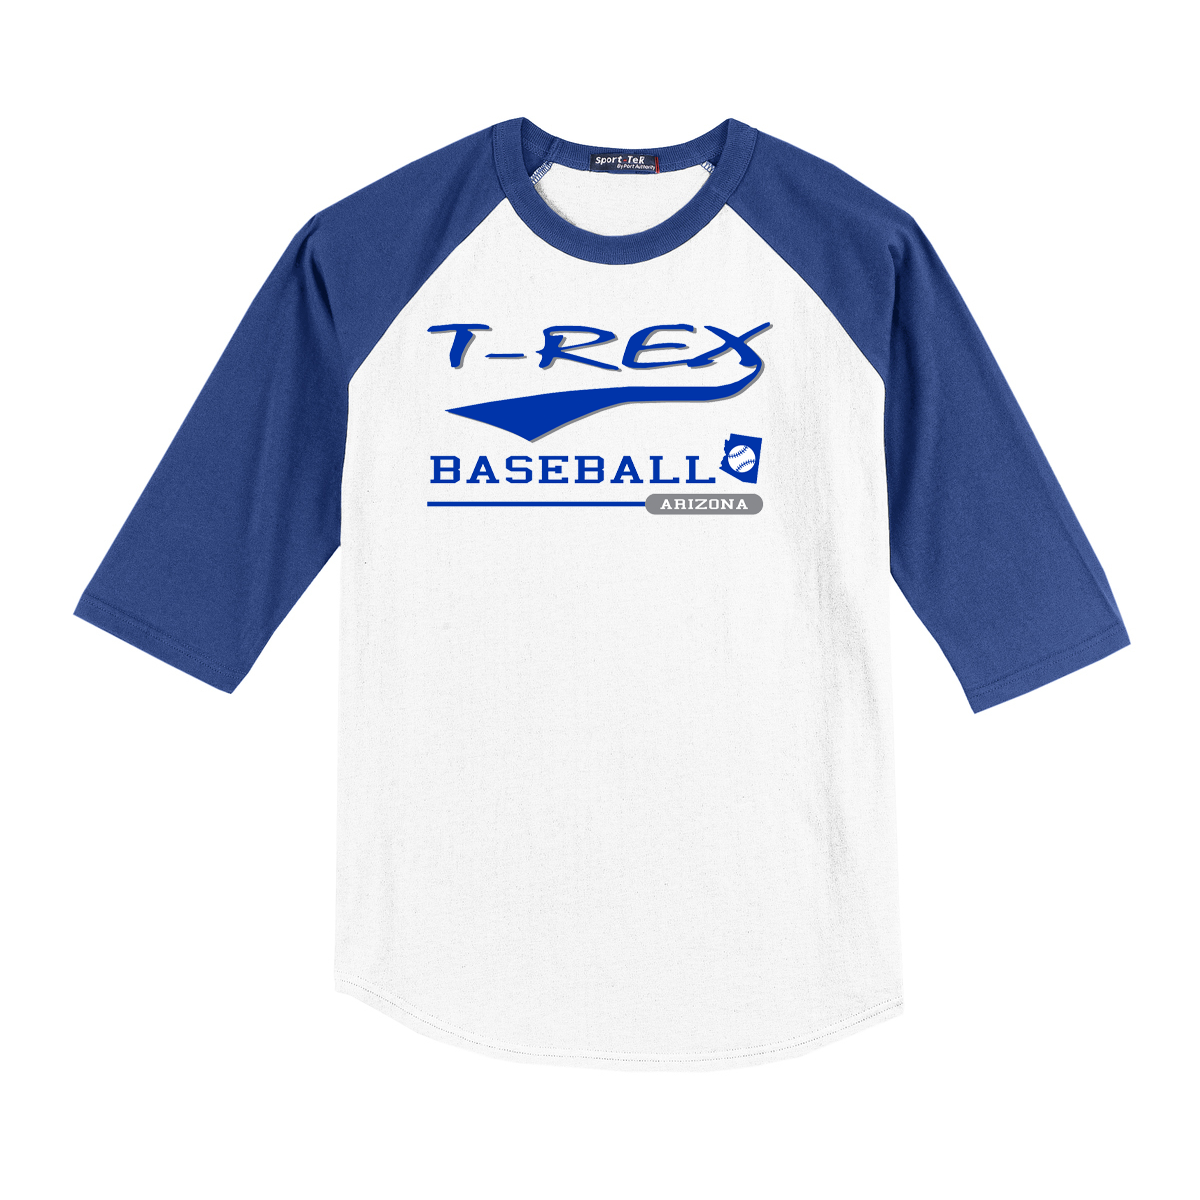 T-Rex Baseball 3/4 Sleeve Baseball Shirt